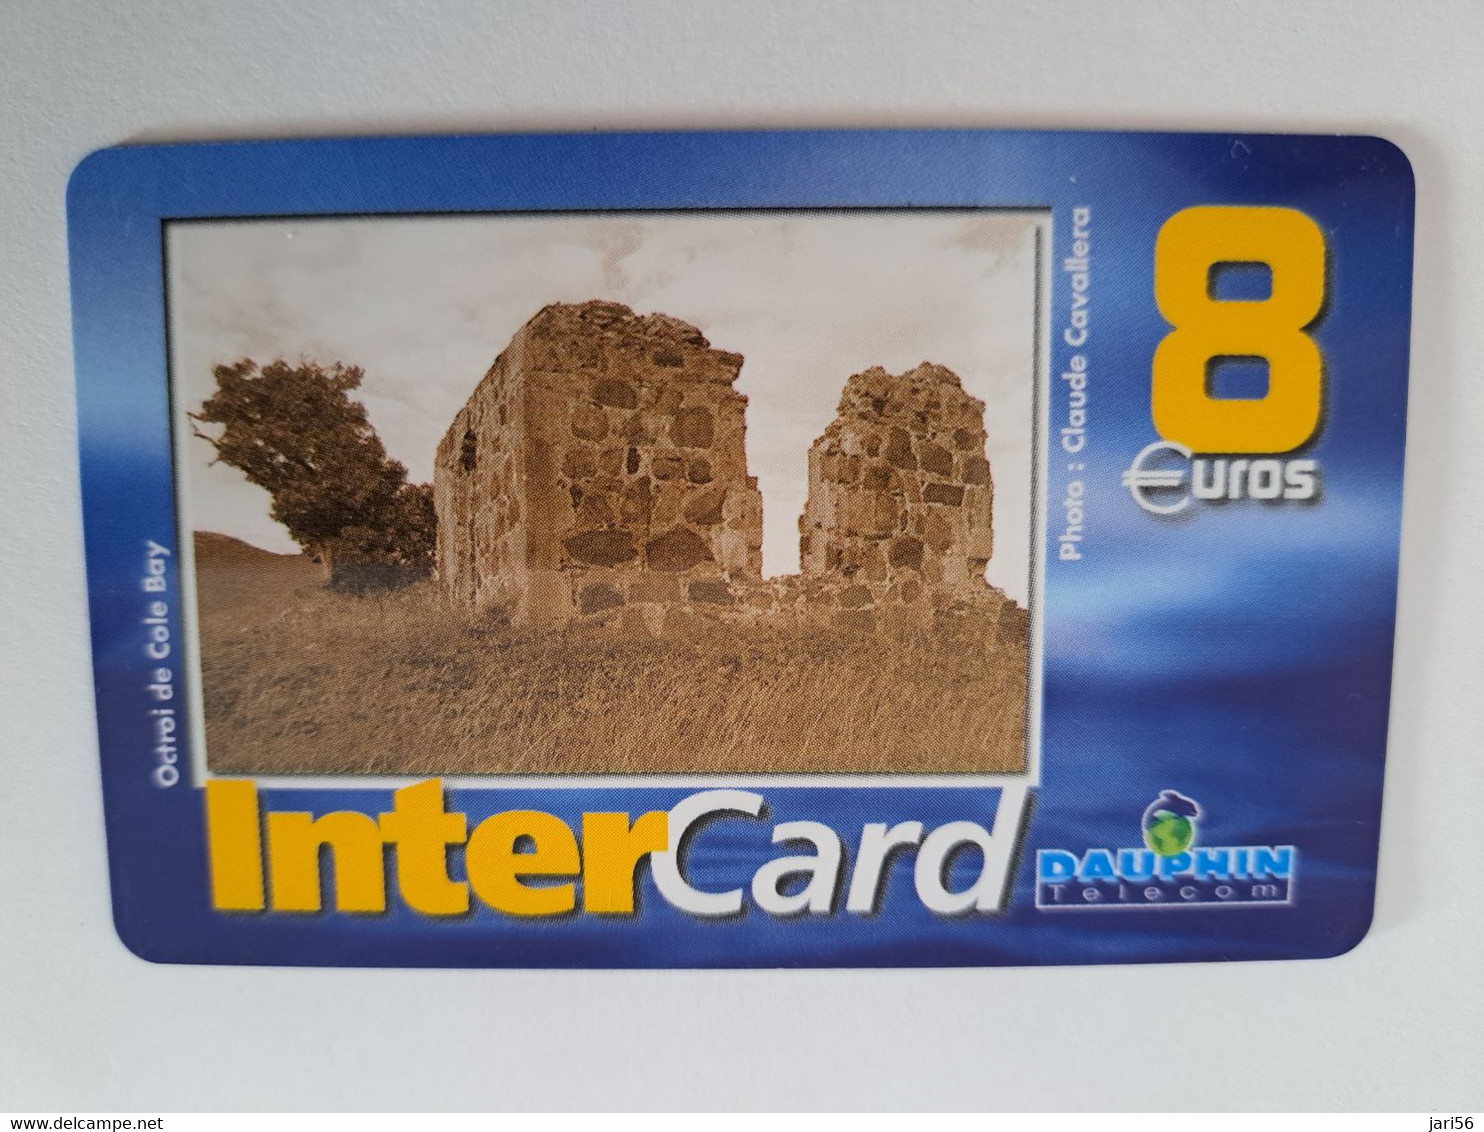 ST MARTIN / INTERCARD  8 EURO  OCTRAY DE COLE BAY         NO 104 Fine Used Card    ** 10907** - Antillen (Frans)